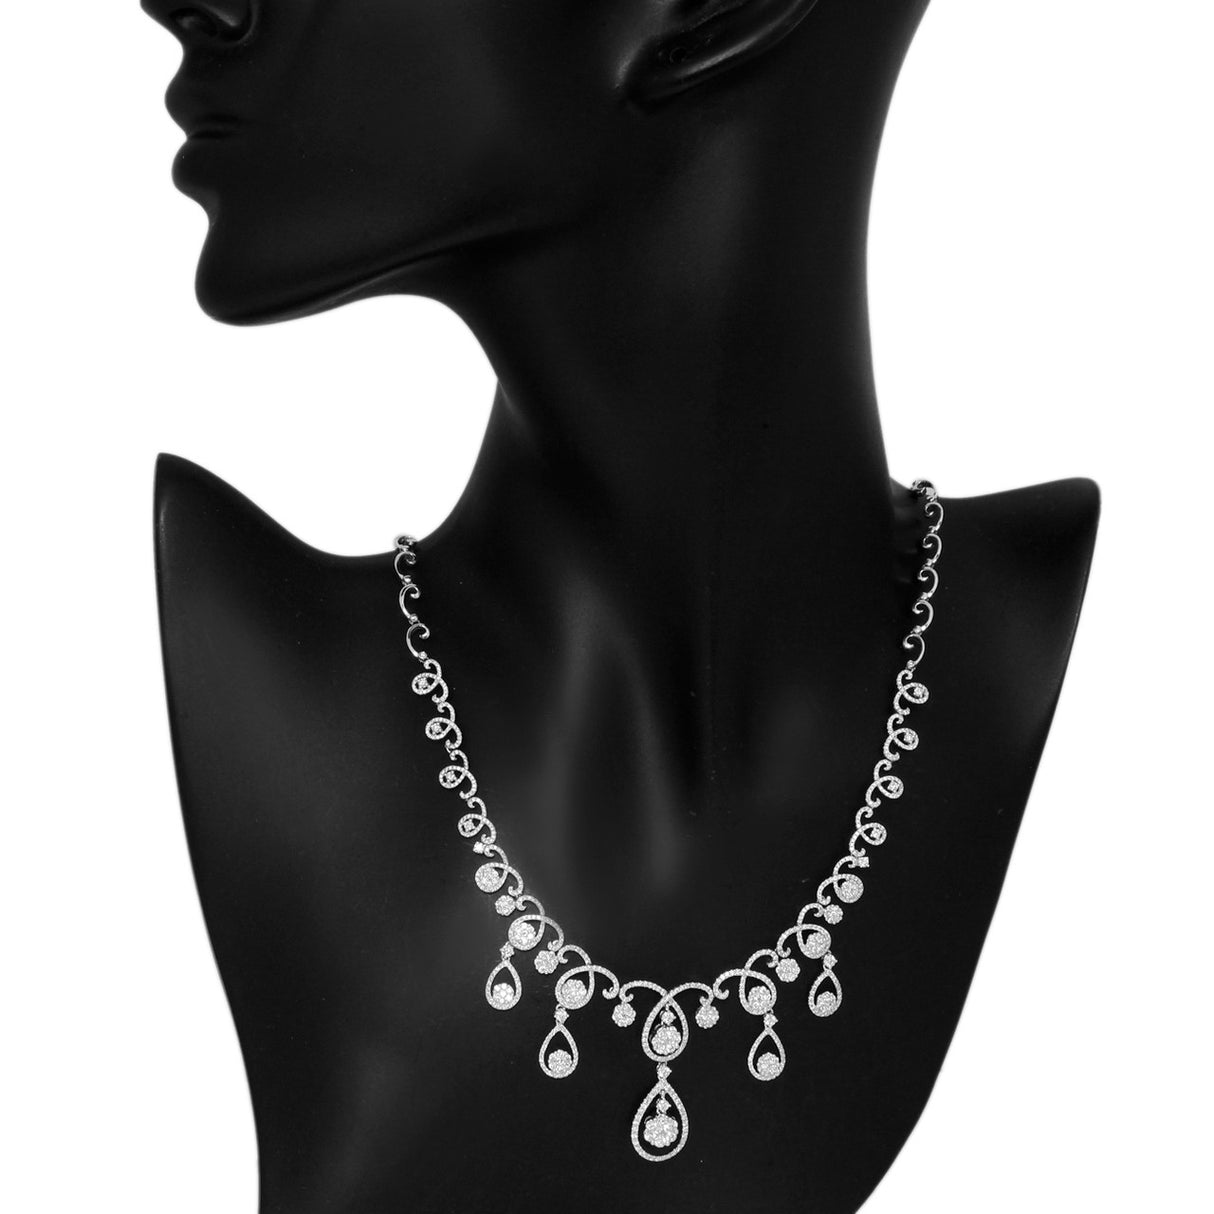 18K White Gold 6.31 Carat Diamond Lavaliere Necklace